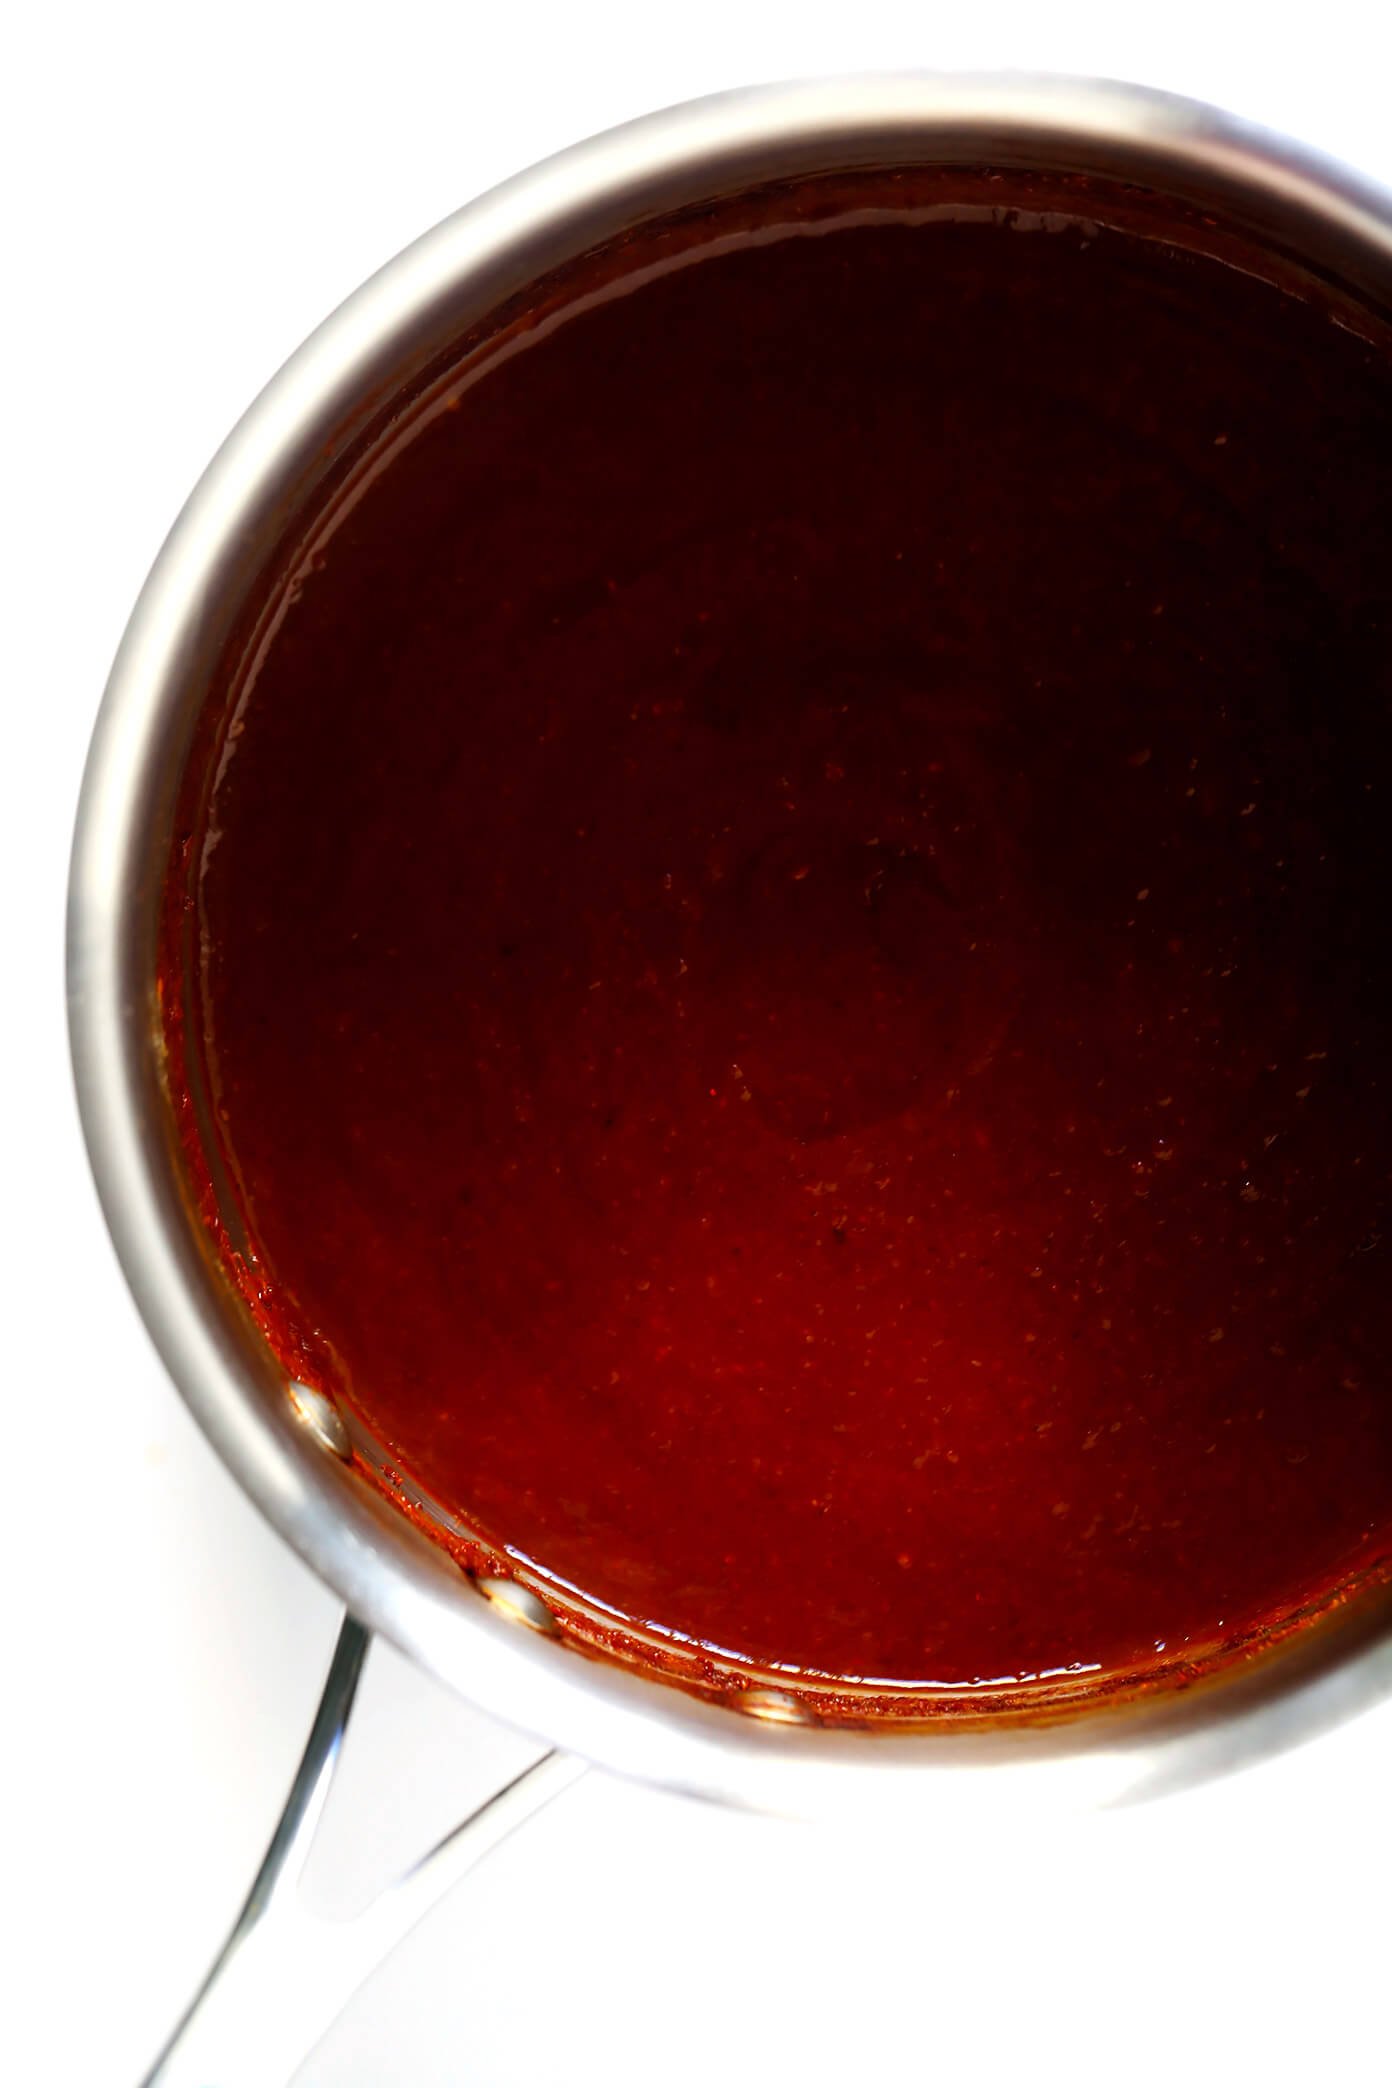 20-Minute Mole Sauce Ingredients in Saucepan